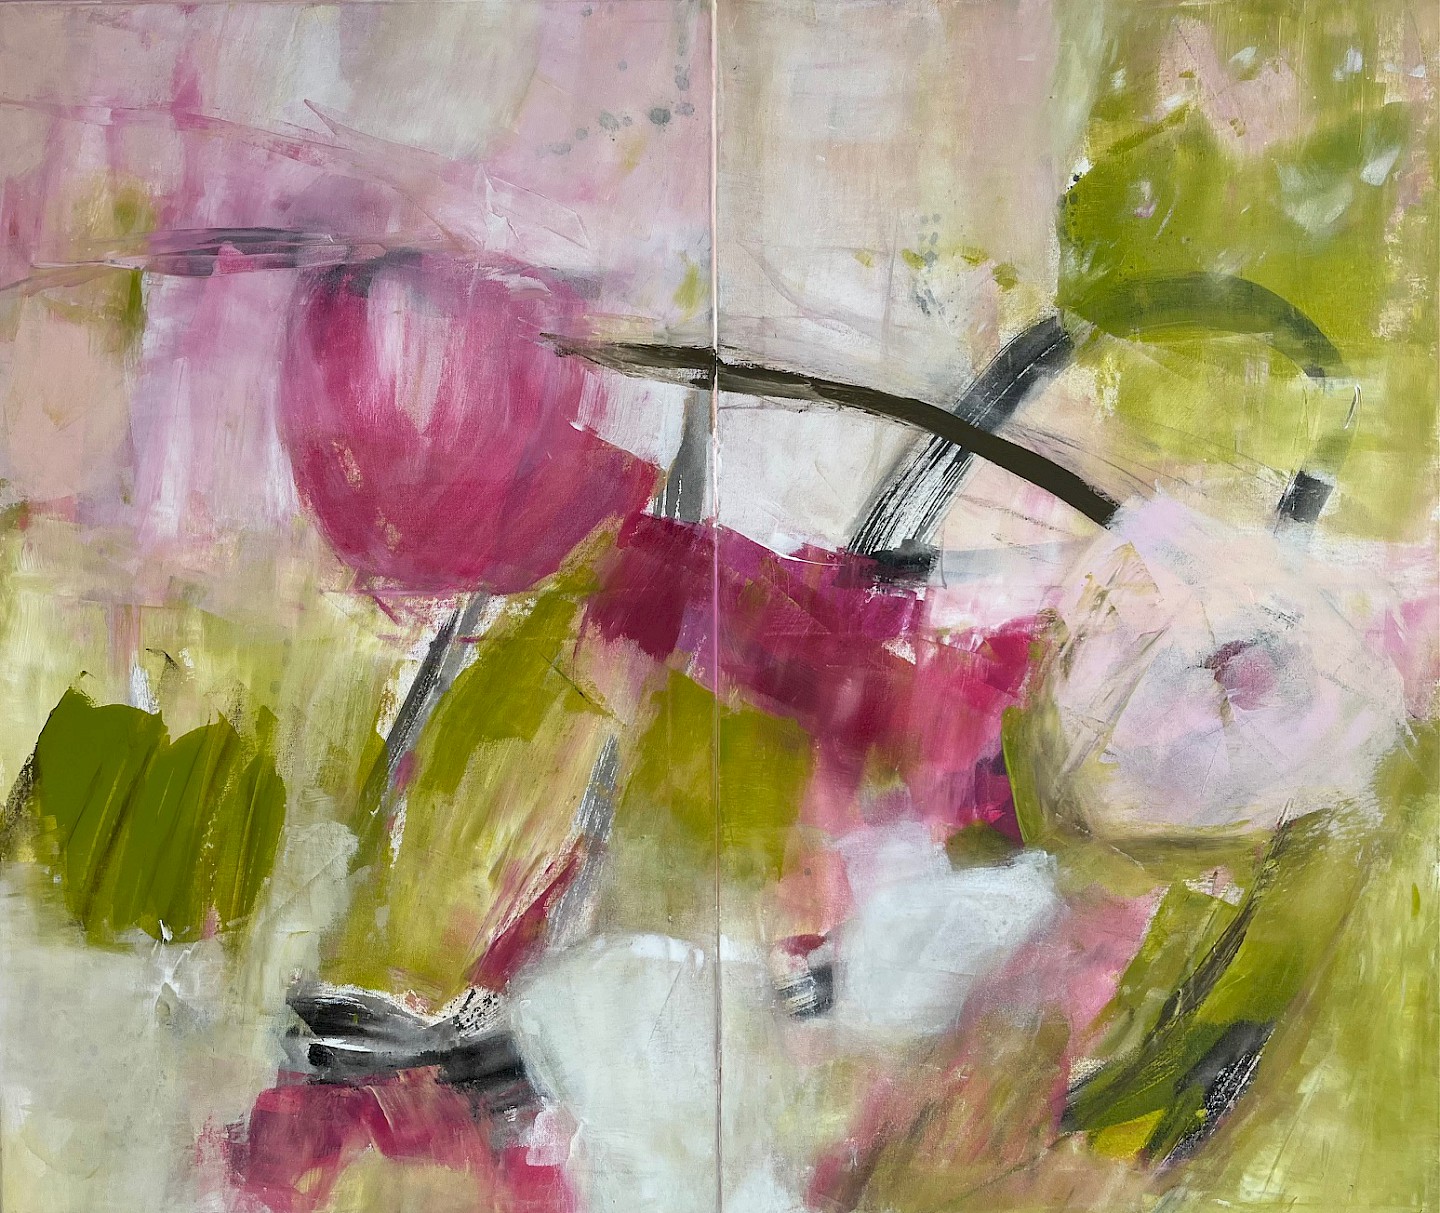 Andrea von Coburg, "spring rush", acrylic on canvas, 2021